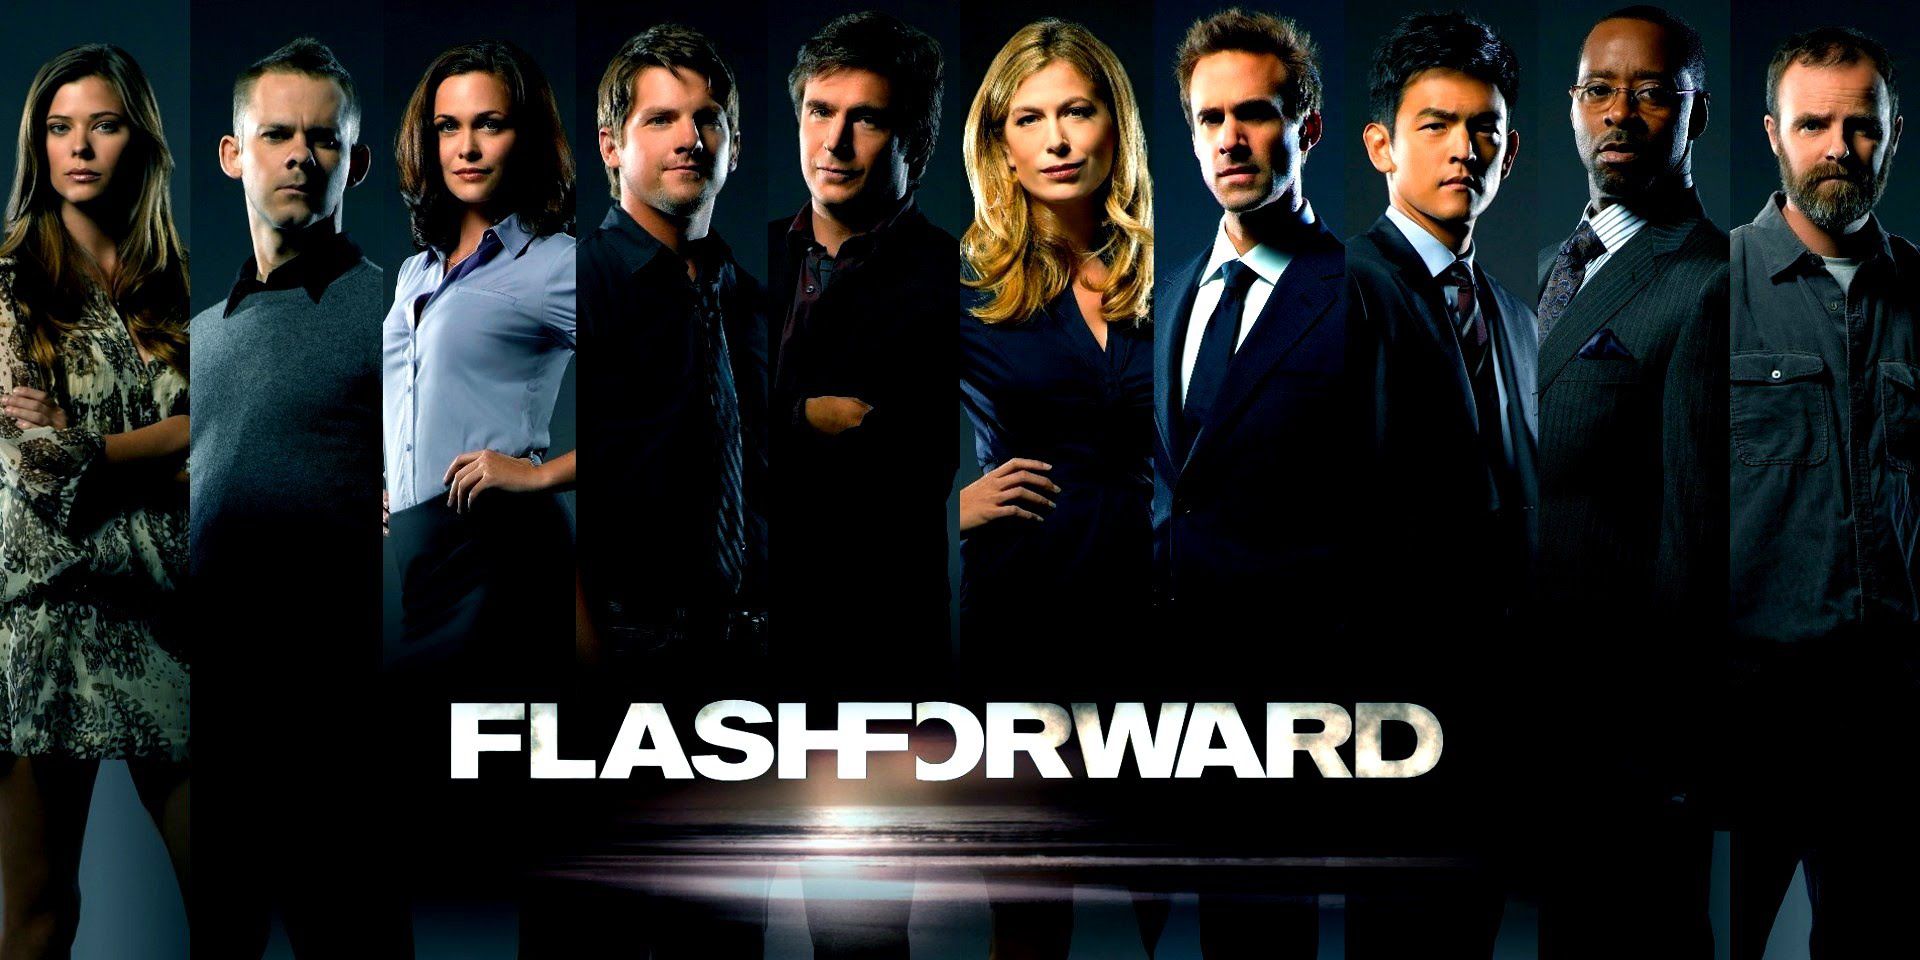 Flashforward TV Show Cast